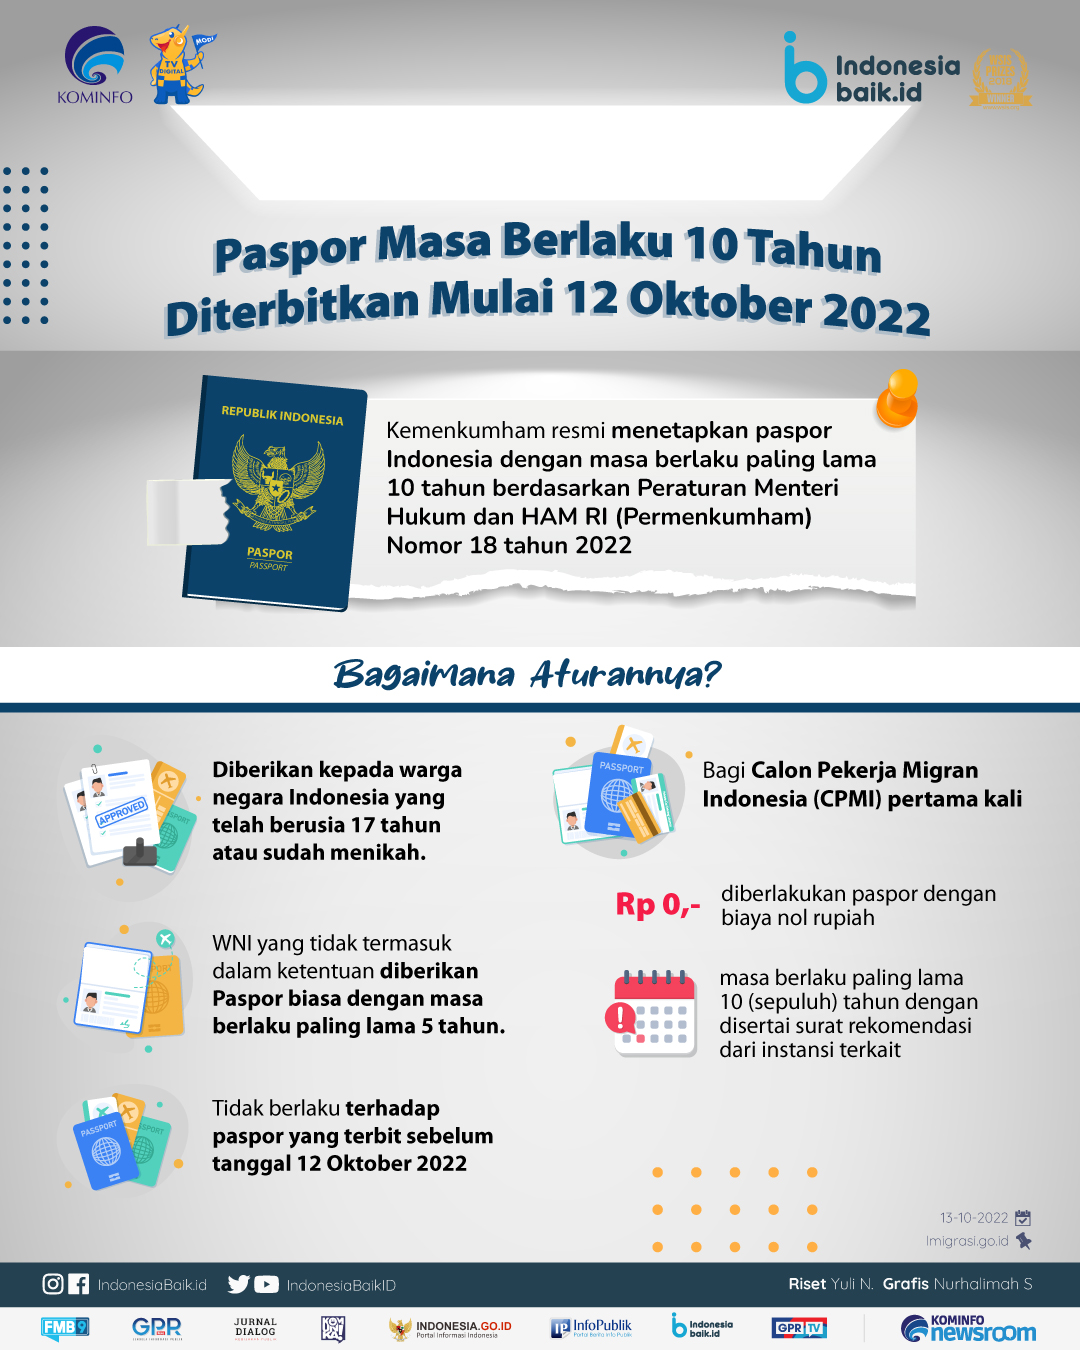 Paspor Indonesia sekarang sudah berlaku hingga 10 tahun